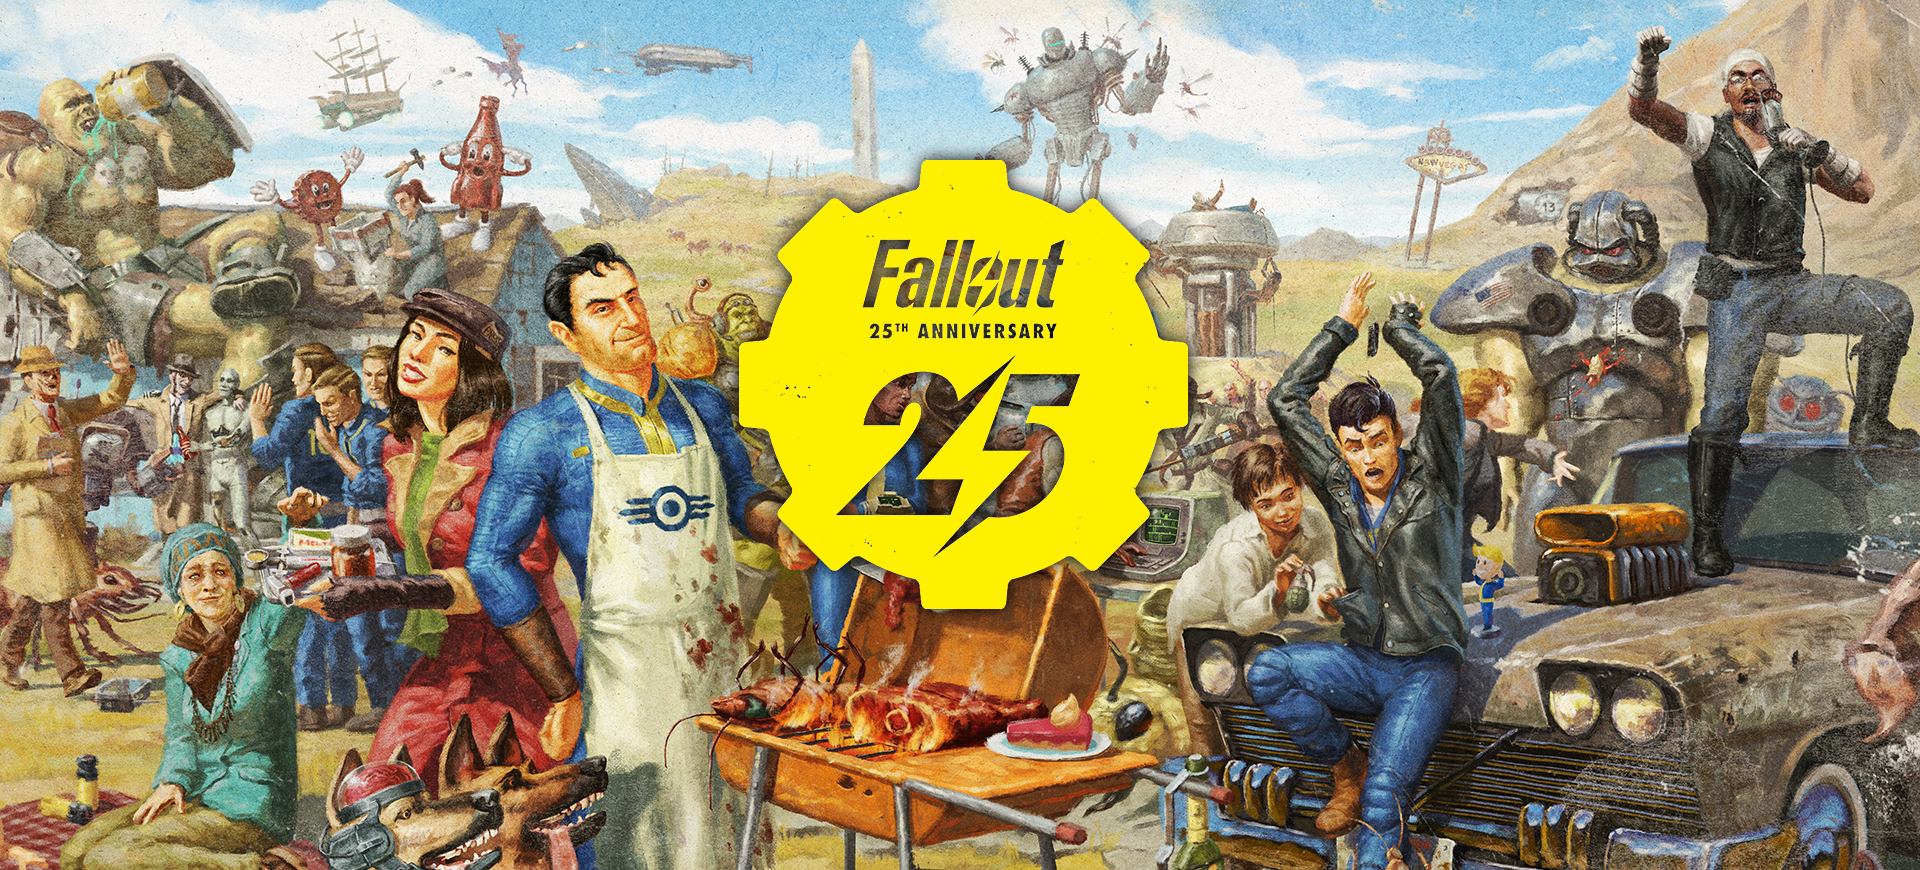 Fallout 4 под землей и под прикрытием продолжать сотрудничество с отцом фото 49